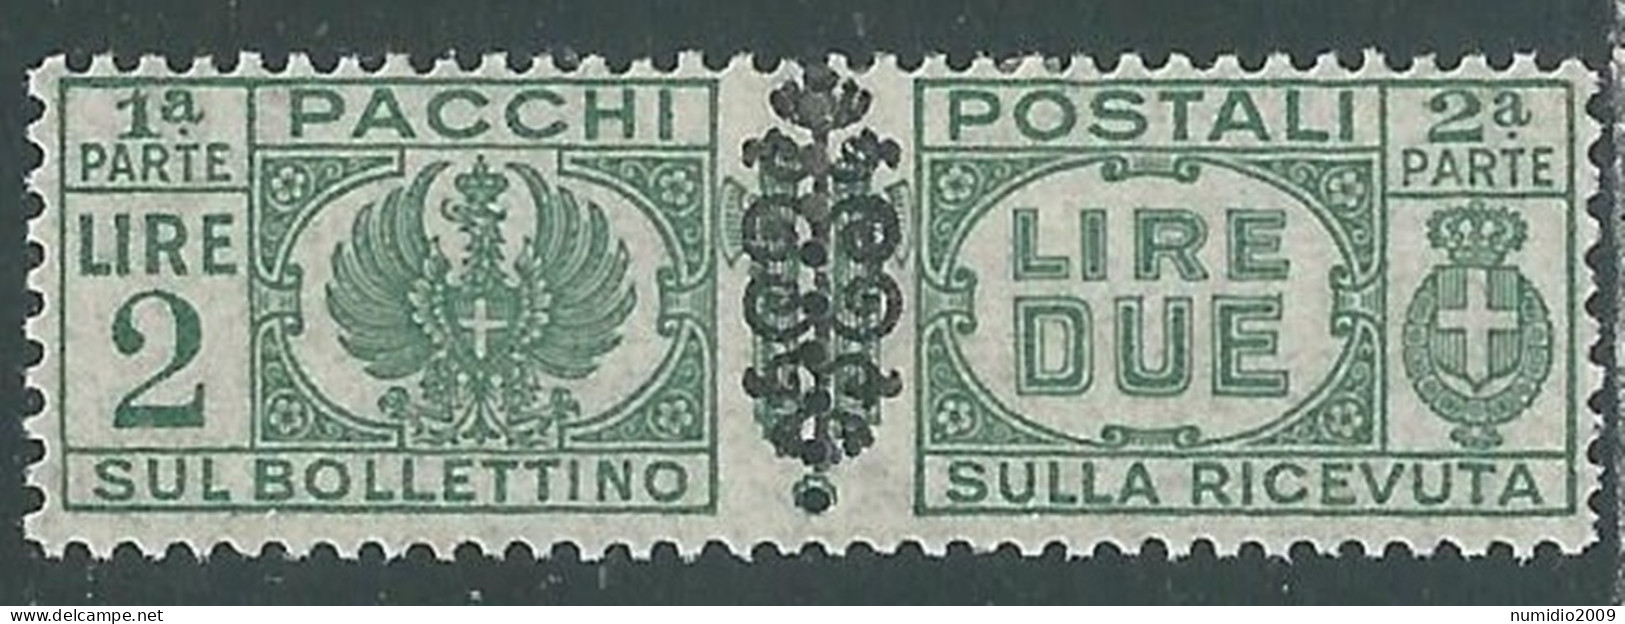 1945 LUOGOTENENZA PACCHI POSTALI 2 LIRE MH * - I18-6 - Colis-postaux